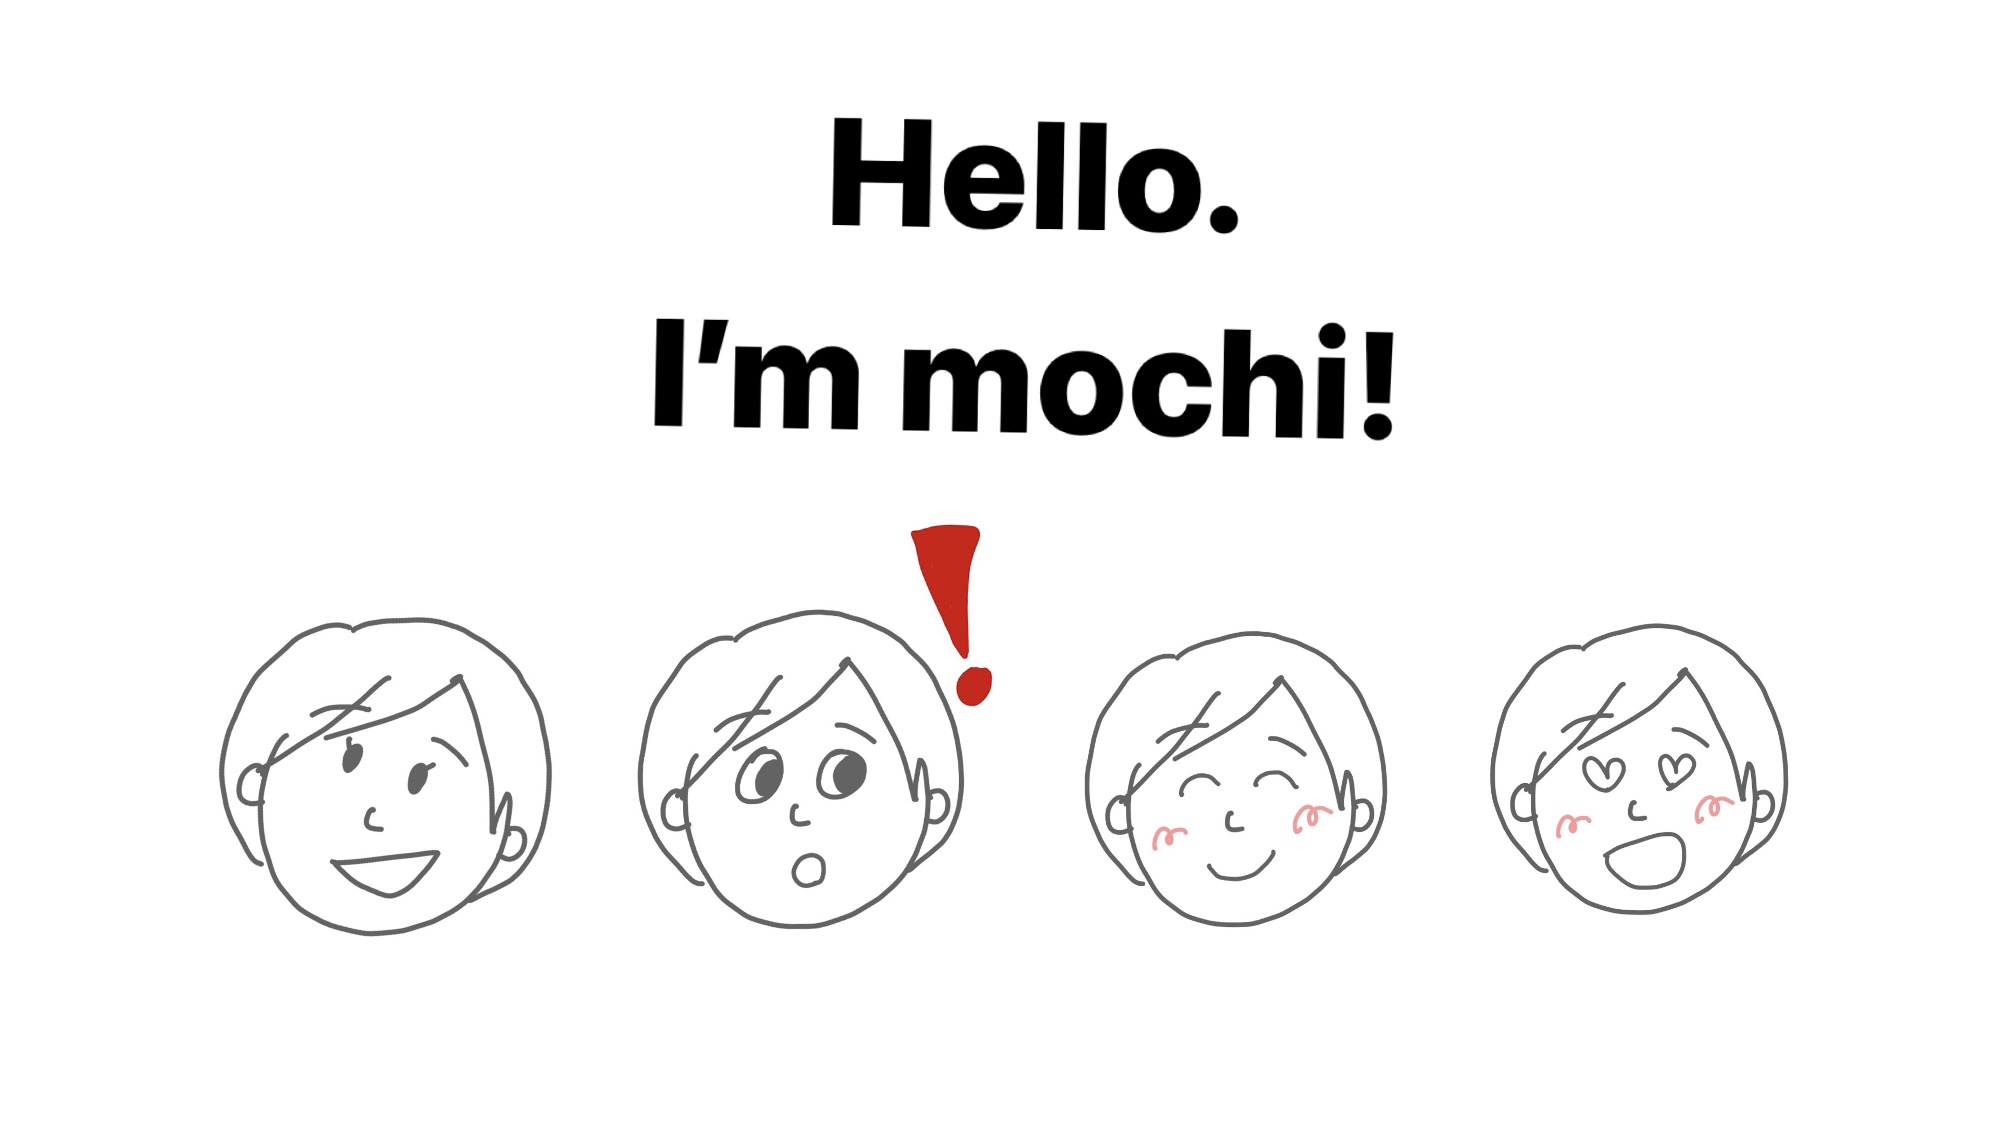 Hello. I’m mochi!